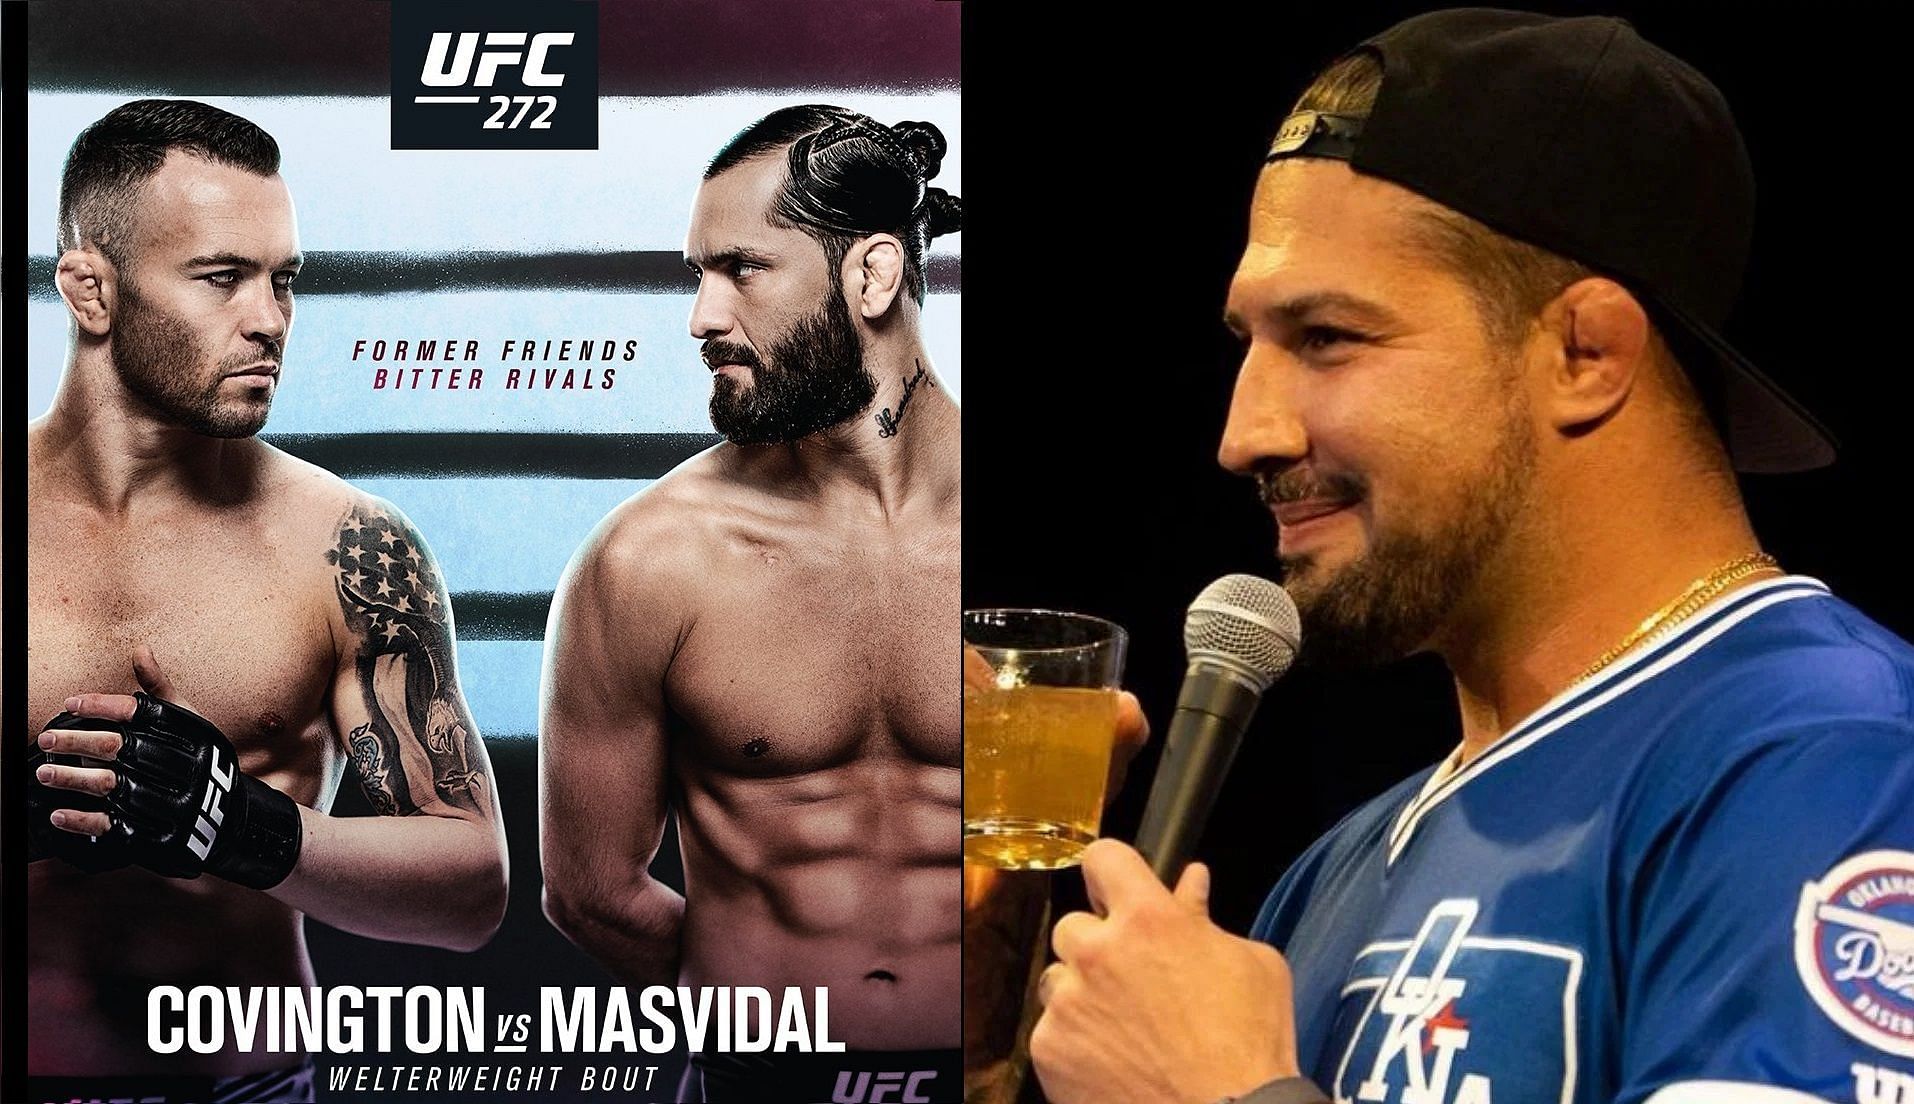 UFC 272: Covington vs. Masvidal poster (left), Brendan Schaub (right)